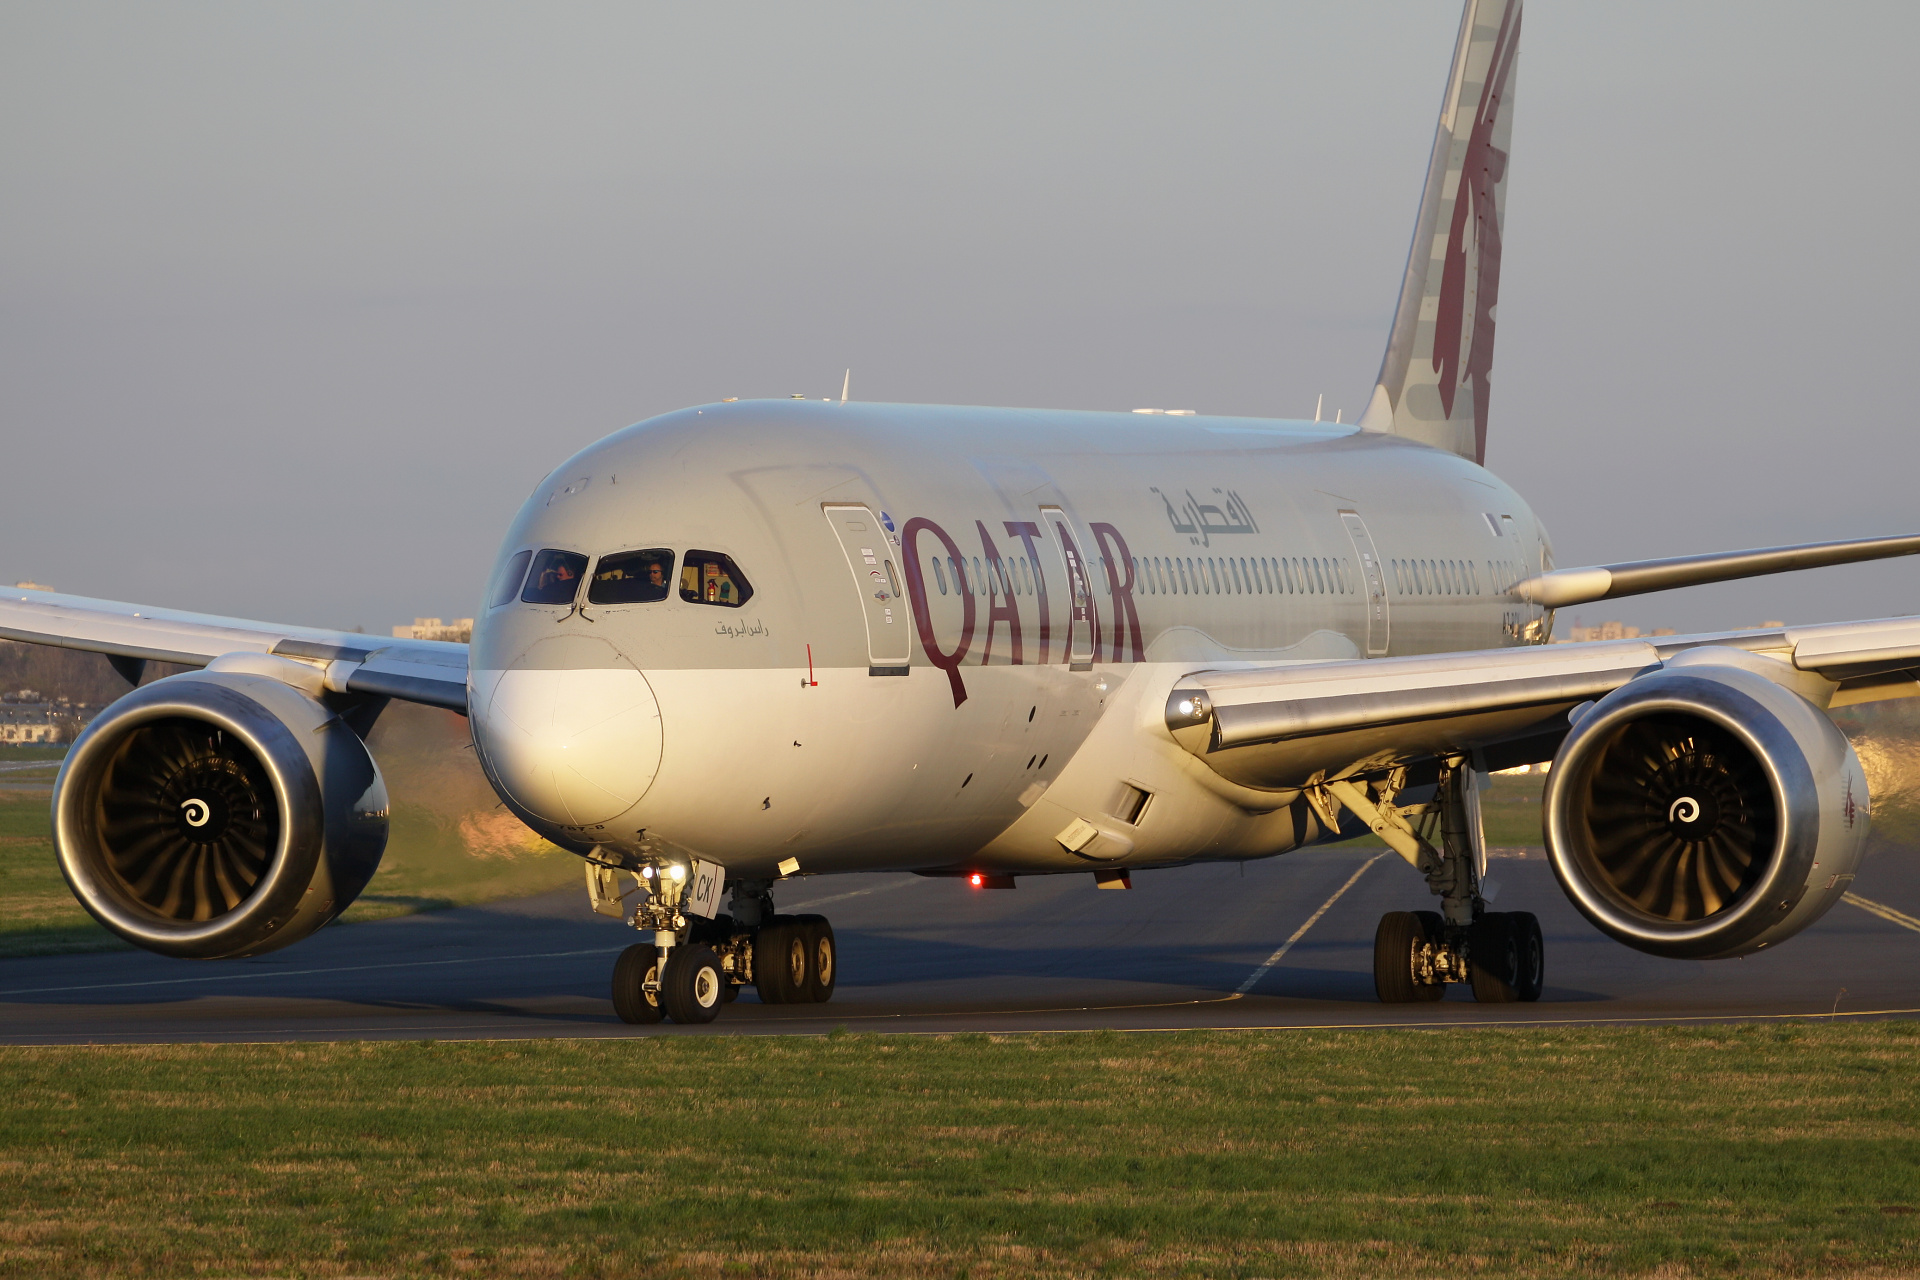 A7-BCK (Aircraft » EPWA Spotting » Boeing 787-8 Dreamliner » Qatar Airways)